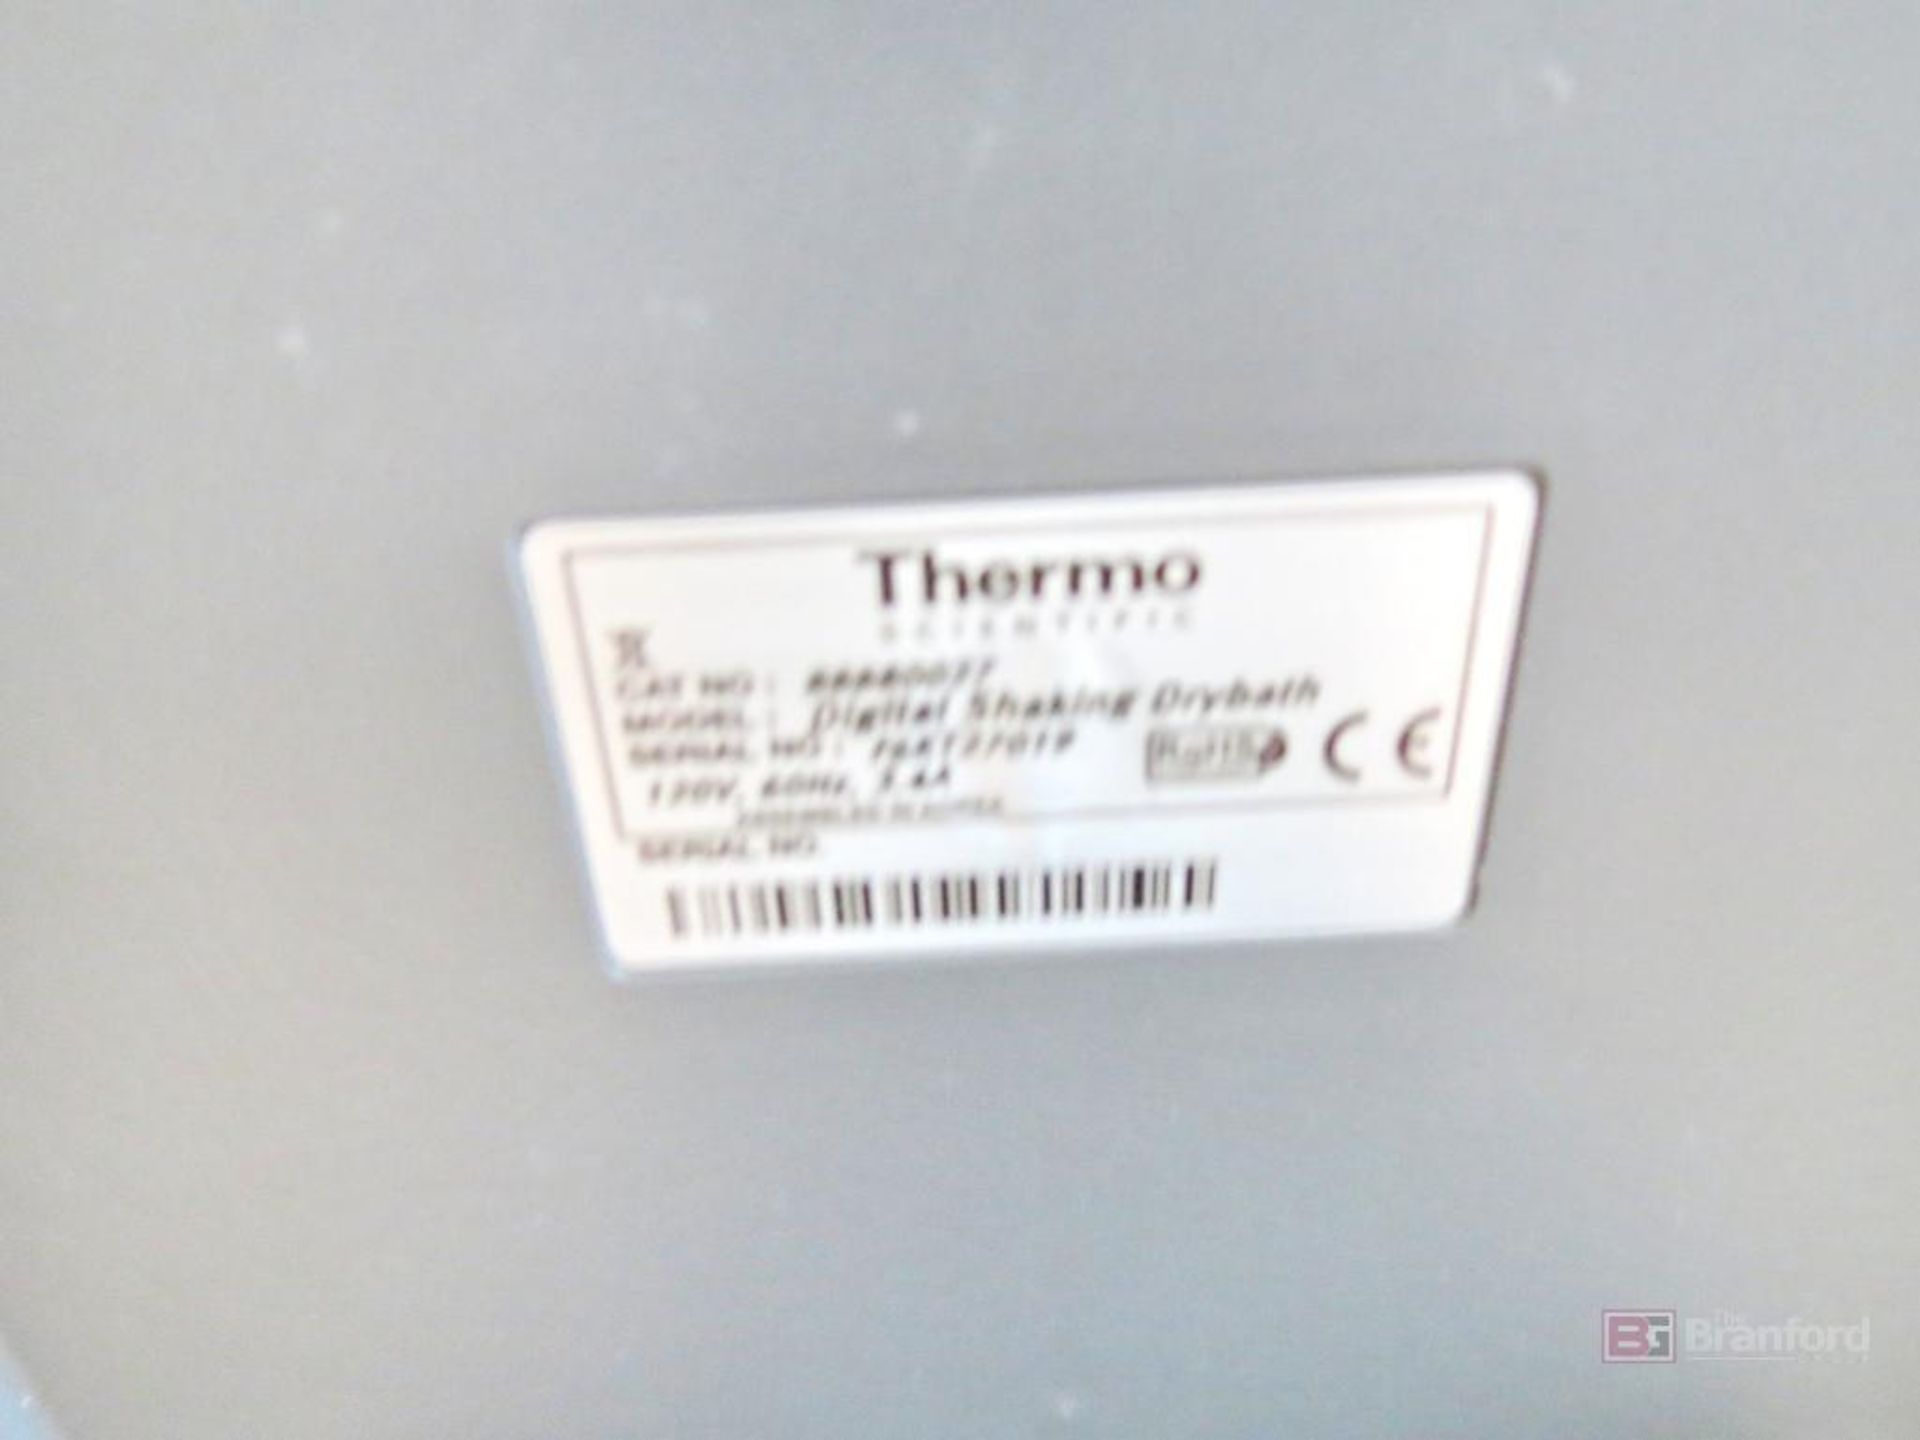 Thermo 88880027 Digital Shaker Dry Bath - Image 2 of 2